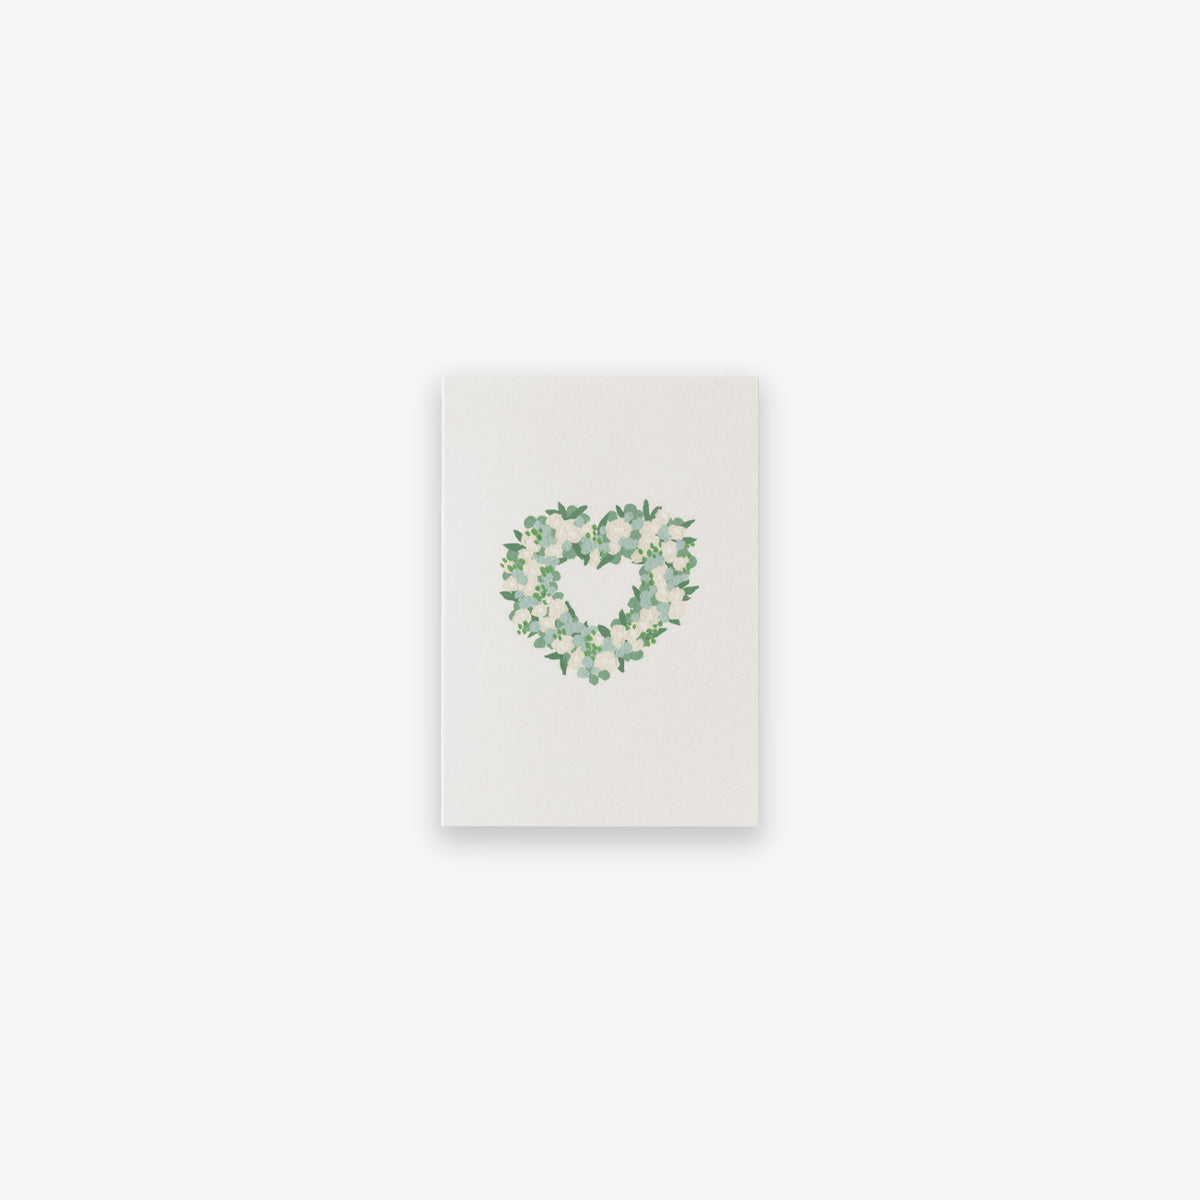 SMALL GREETING CARD // FLOWER HEART II